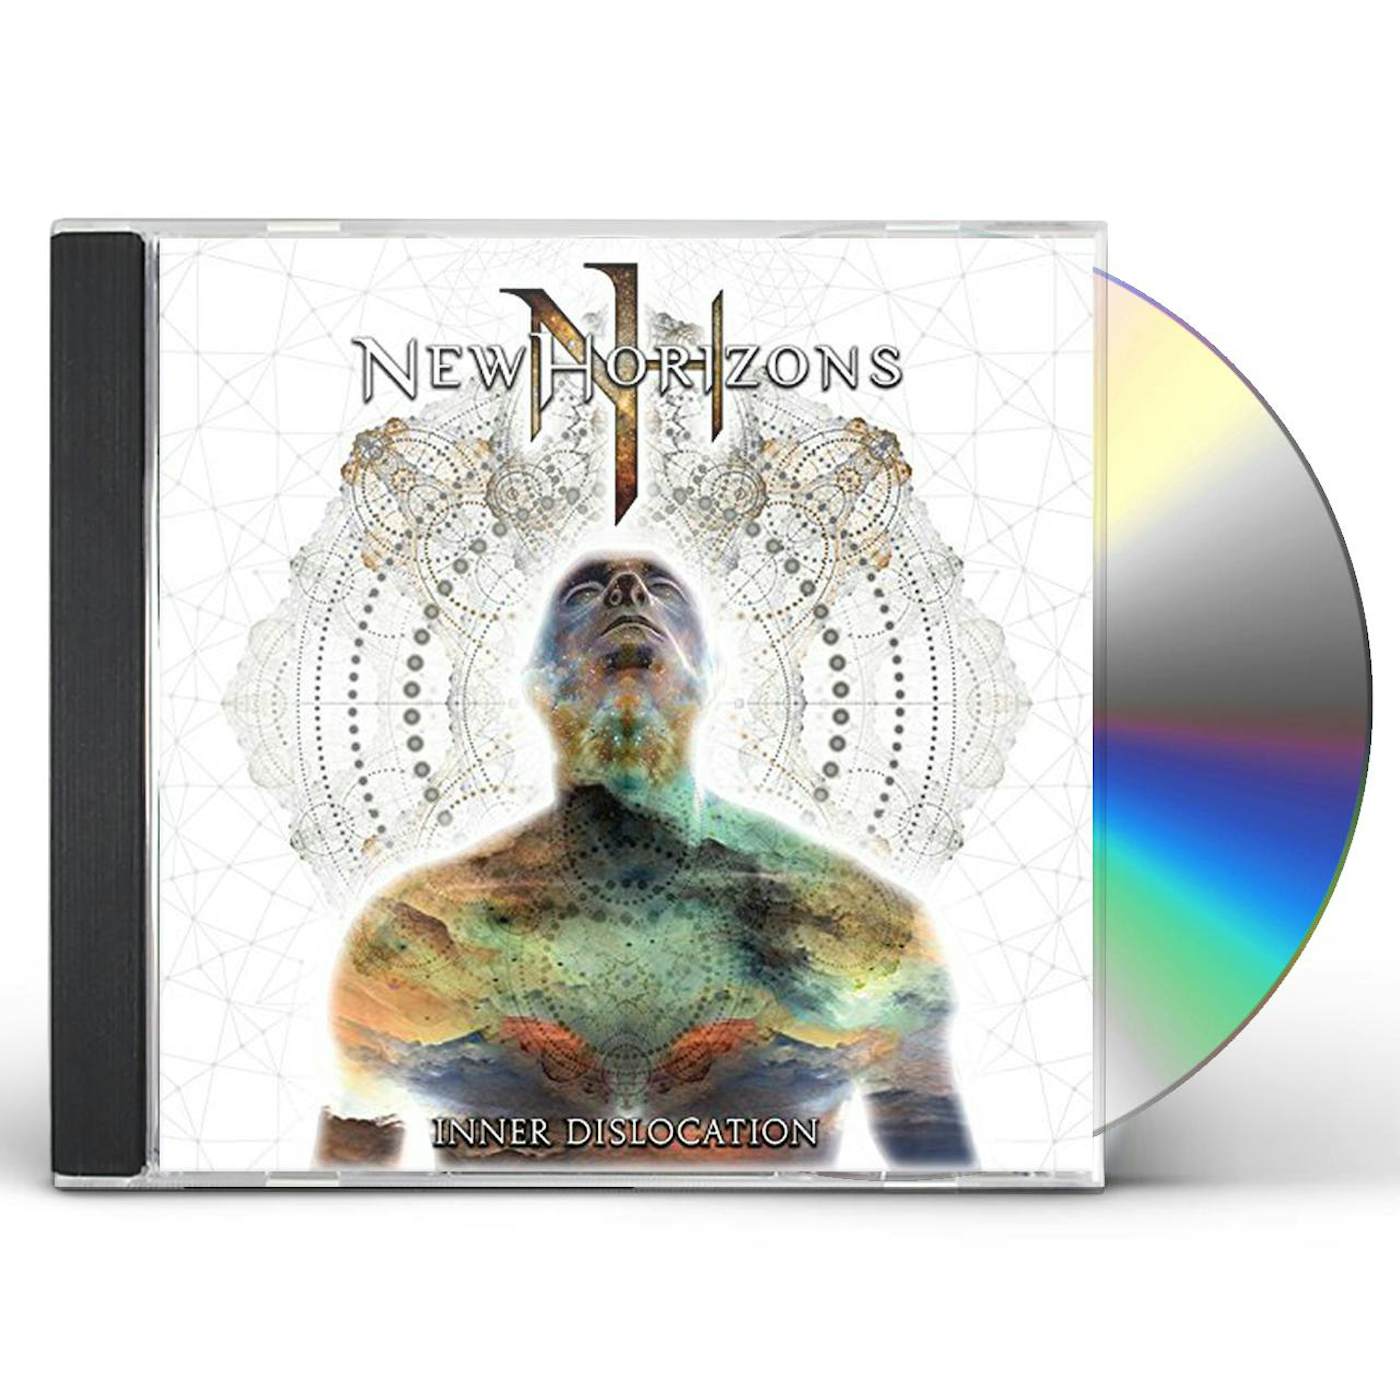 New Horizons INNER DISLOCATION CD